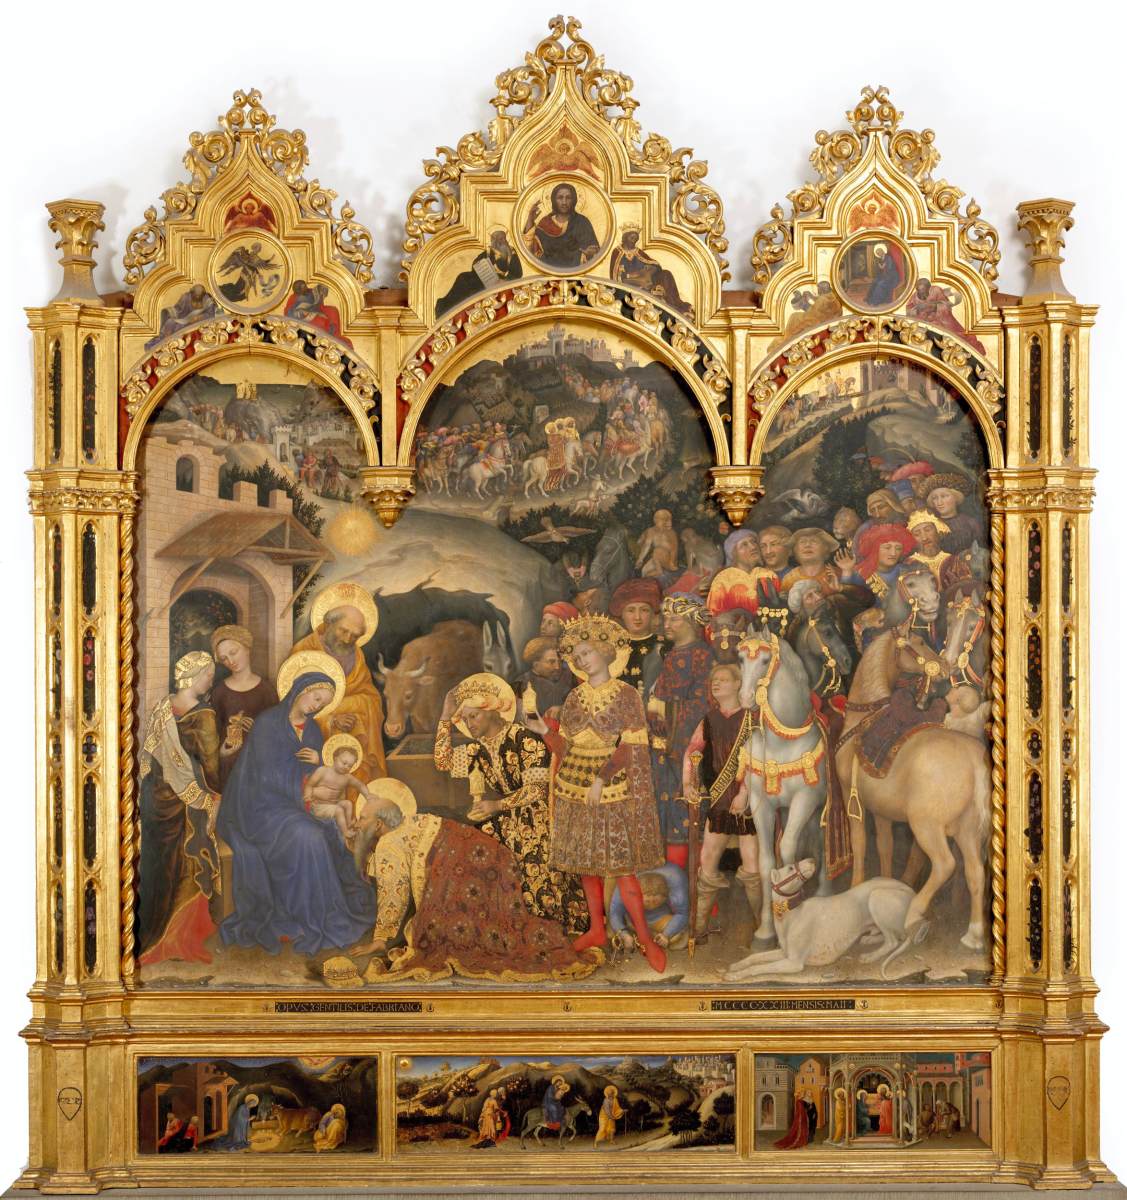 Gentile da Fabriano, Adoration of the Magi (1423; tempera on panel, 300 x 282 cm; Florence, Uffizi Galleries)